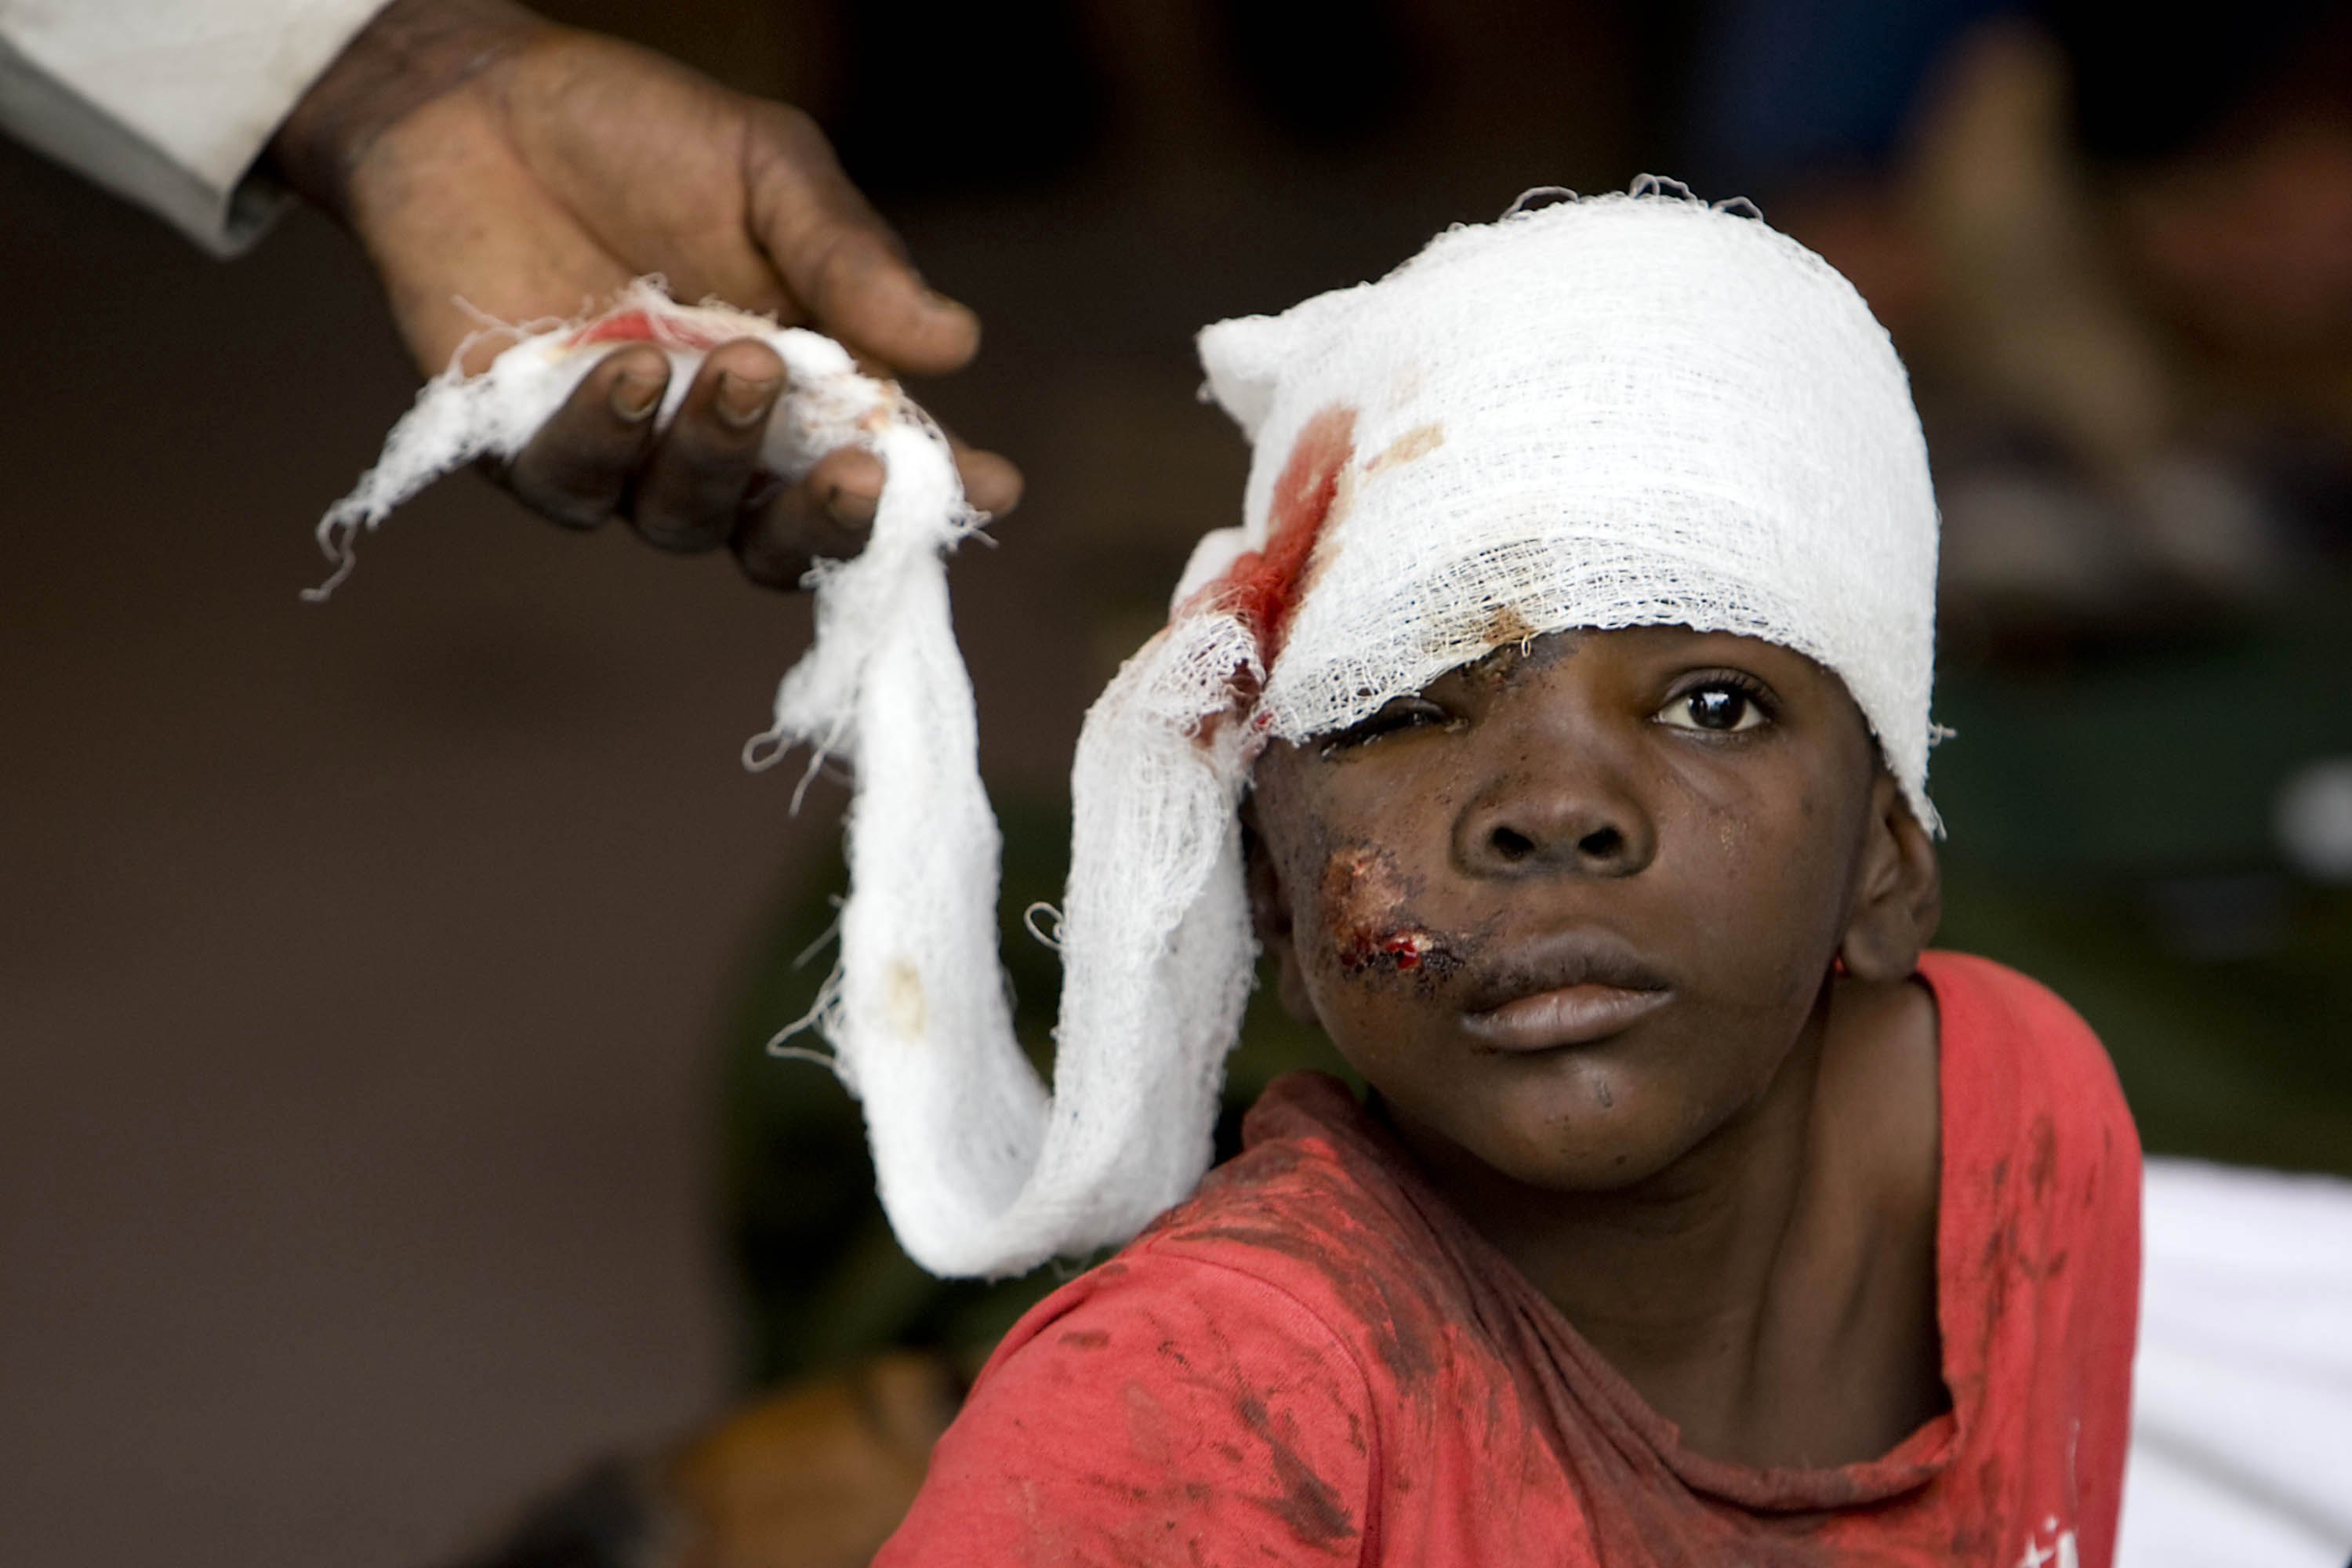 Boy receiving treatment after Haiti earthquake